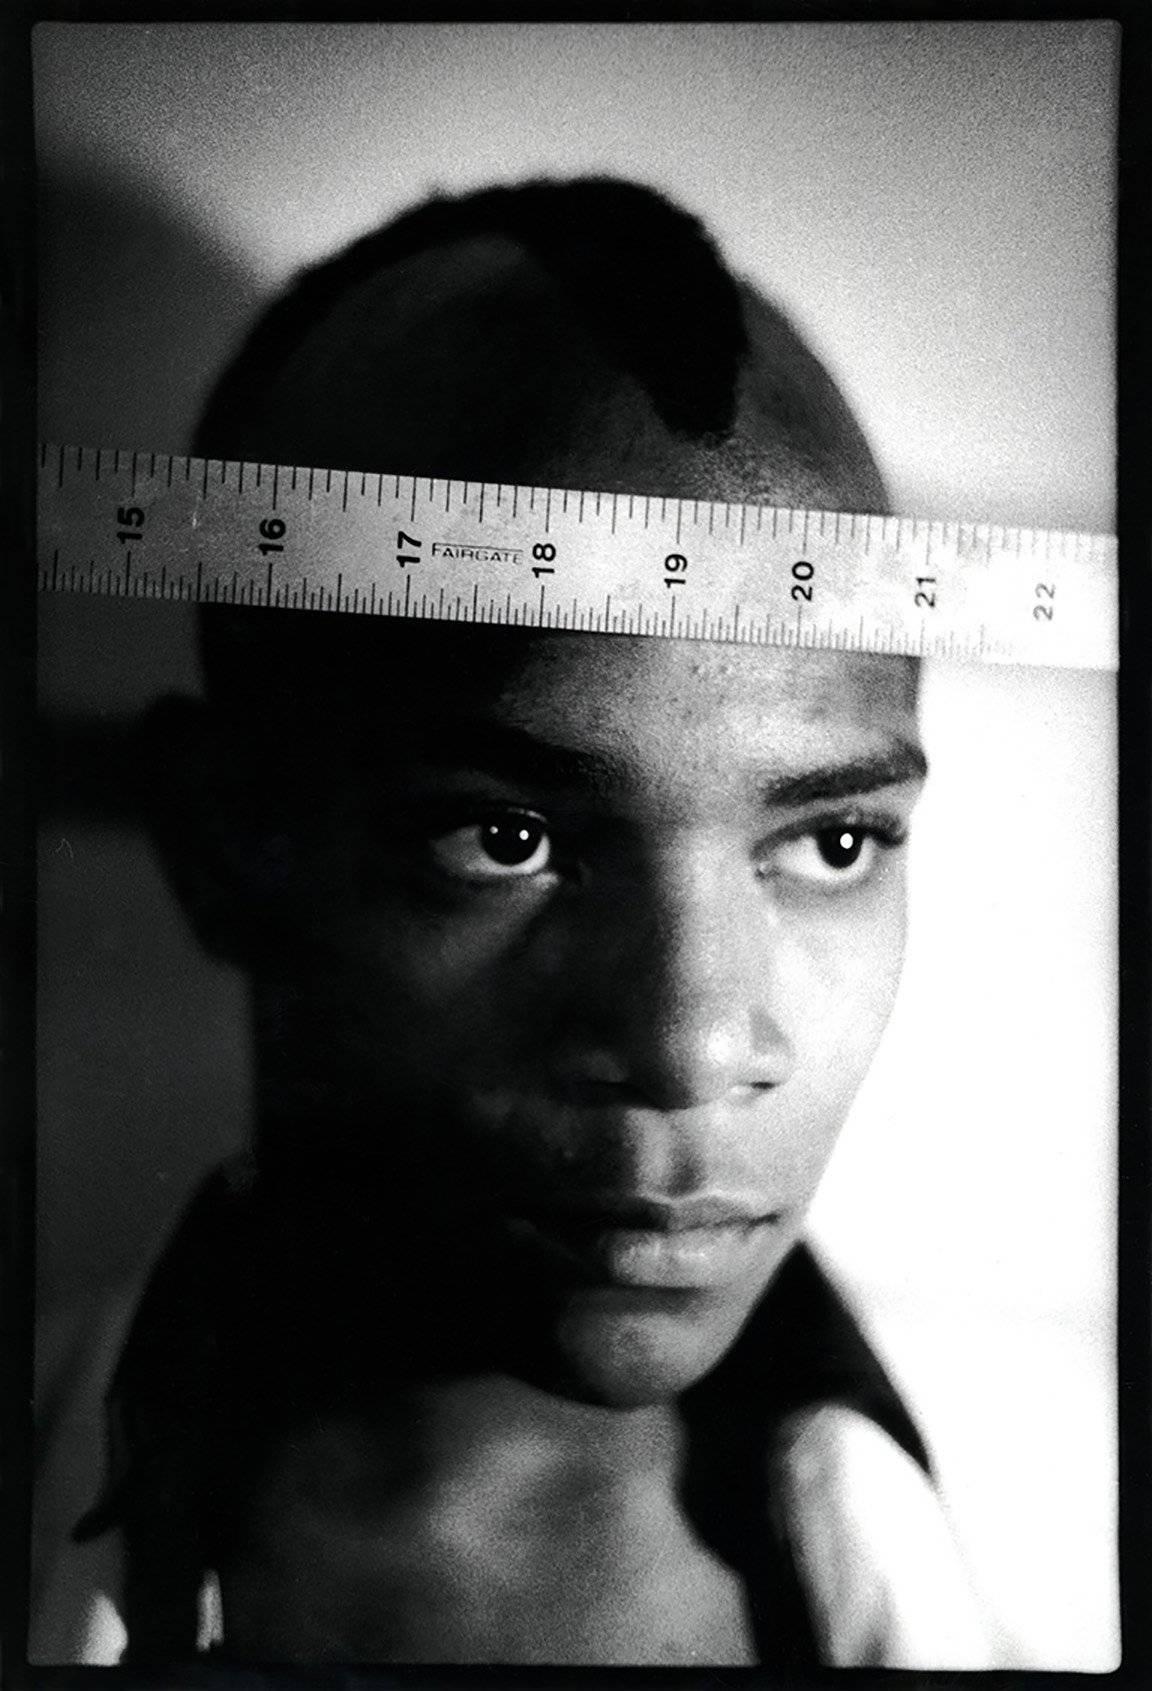 Nicholas Taylor Black and White Photograph - Basquiat 1979 photograph (Nick Taylor Jean-Michel Basquiat Gray)